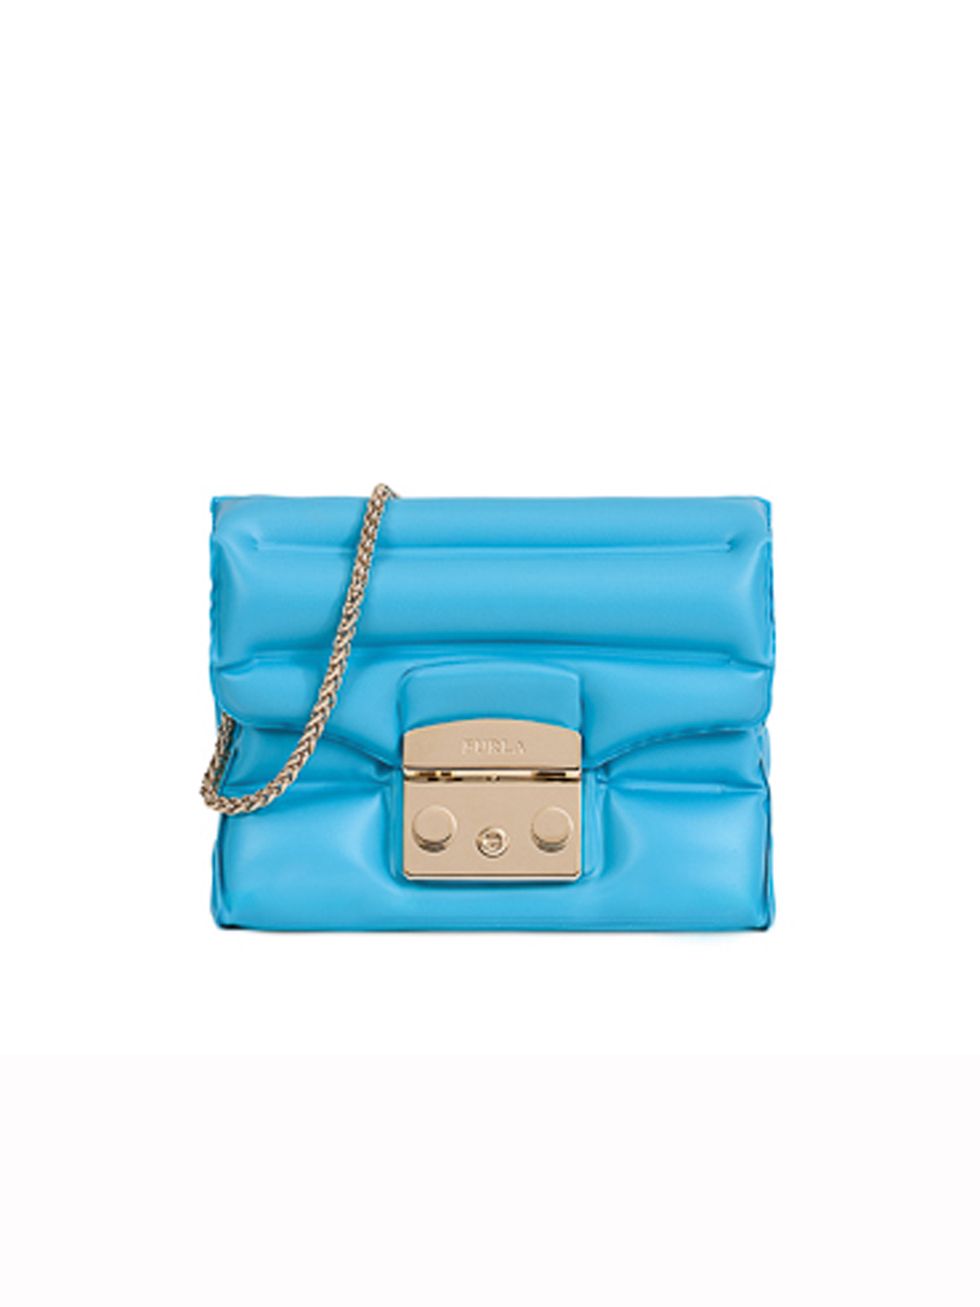 Turquoise, Bag, Blue, Aqua, Handbag, Leather, Fashion accessory, Electric blue, Teal, Azure, 